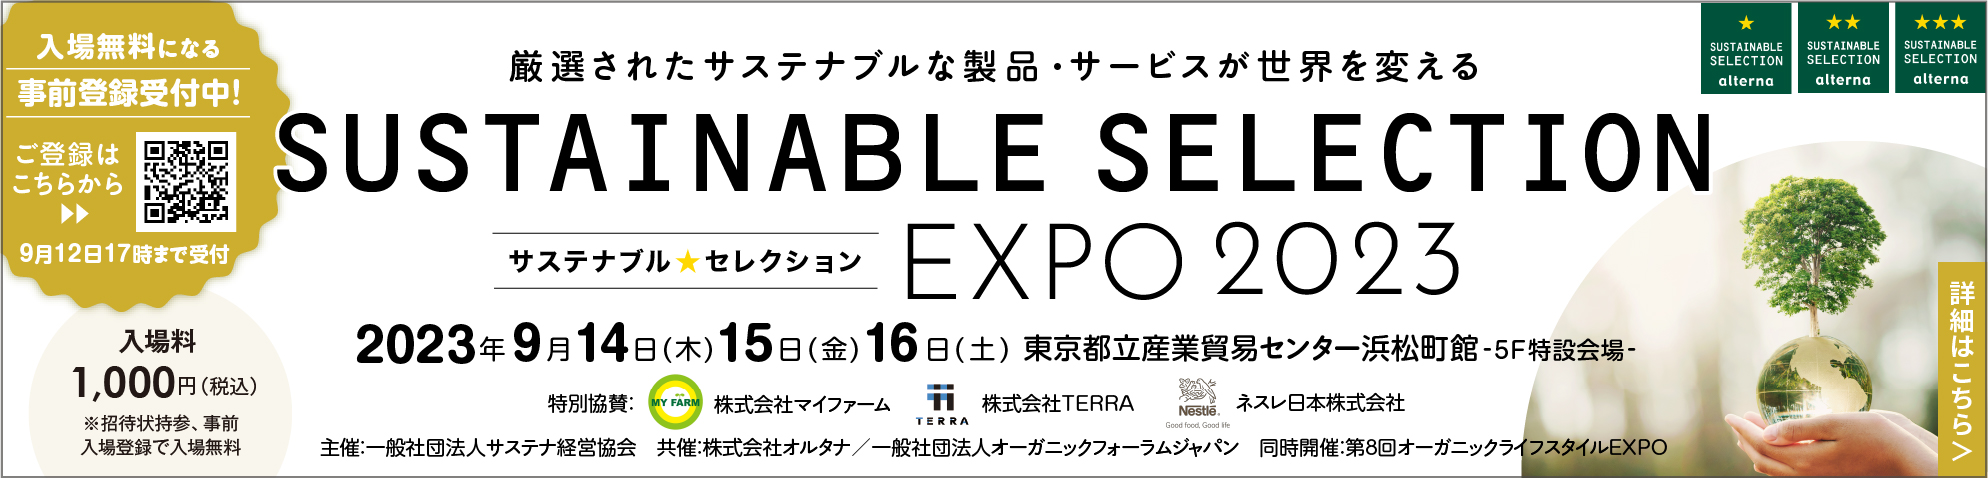 SUSTAINABLE SELECTION サステナブル★セレクション EXPO 2023